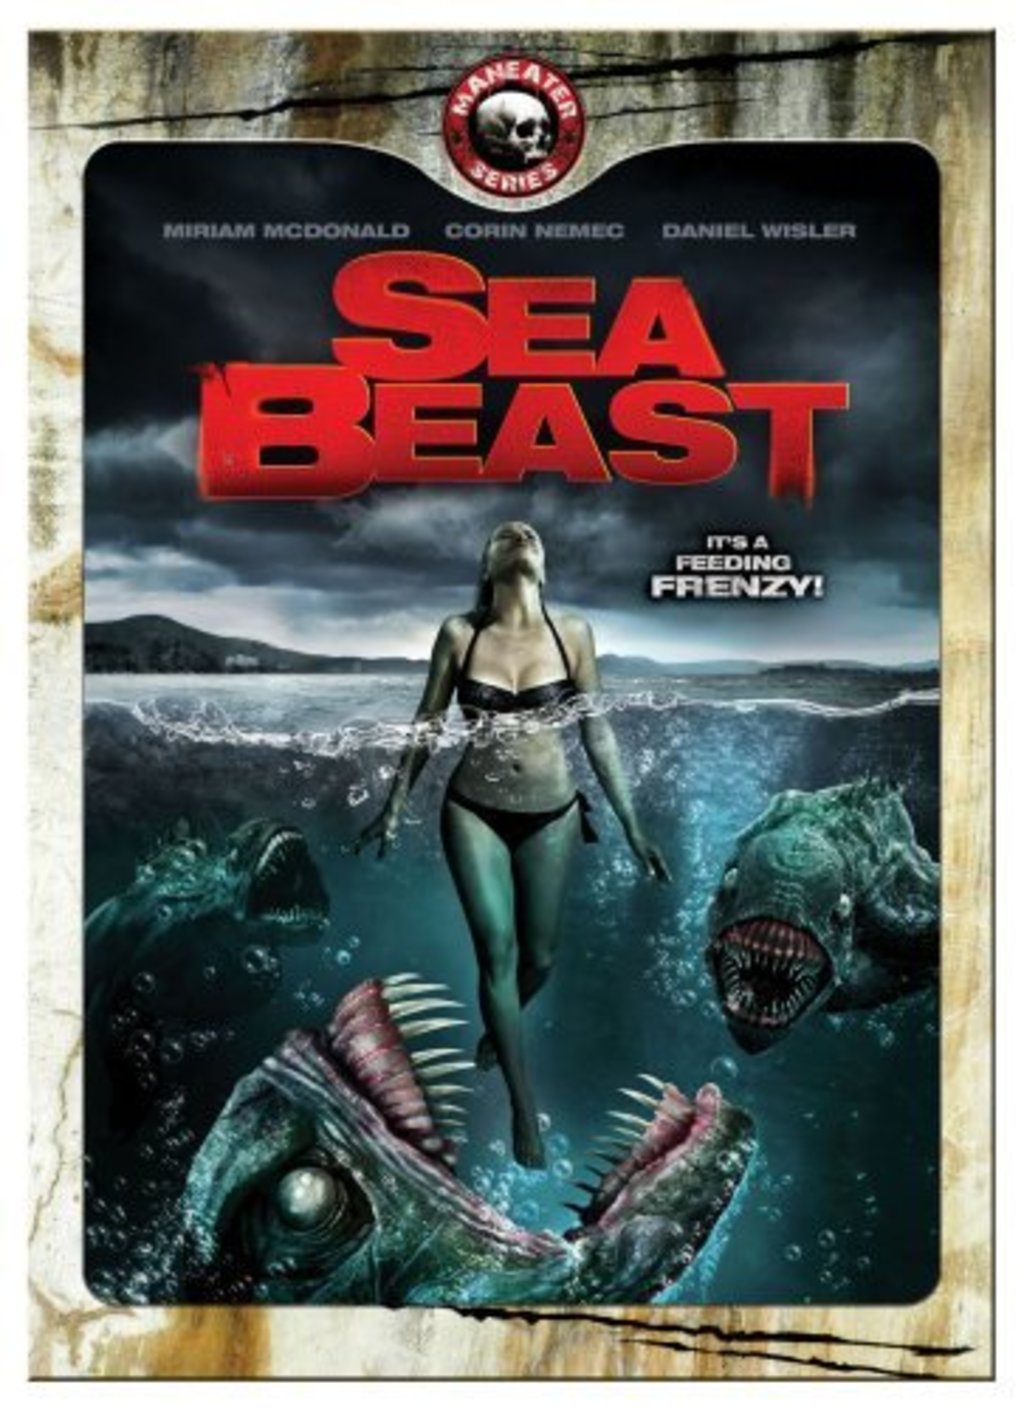 Watch The Sea Beast on Netflix Today! | NetflixMovies.com